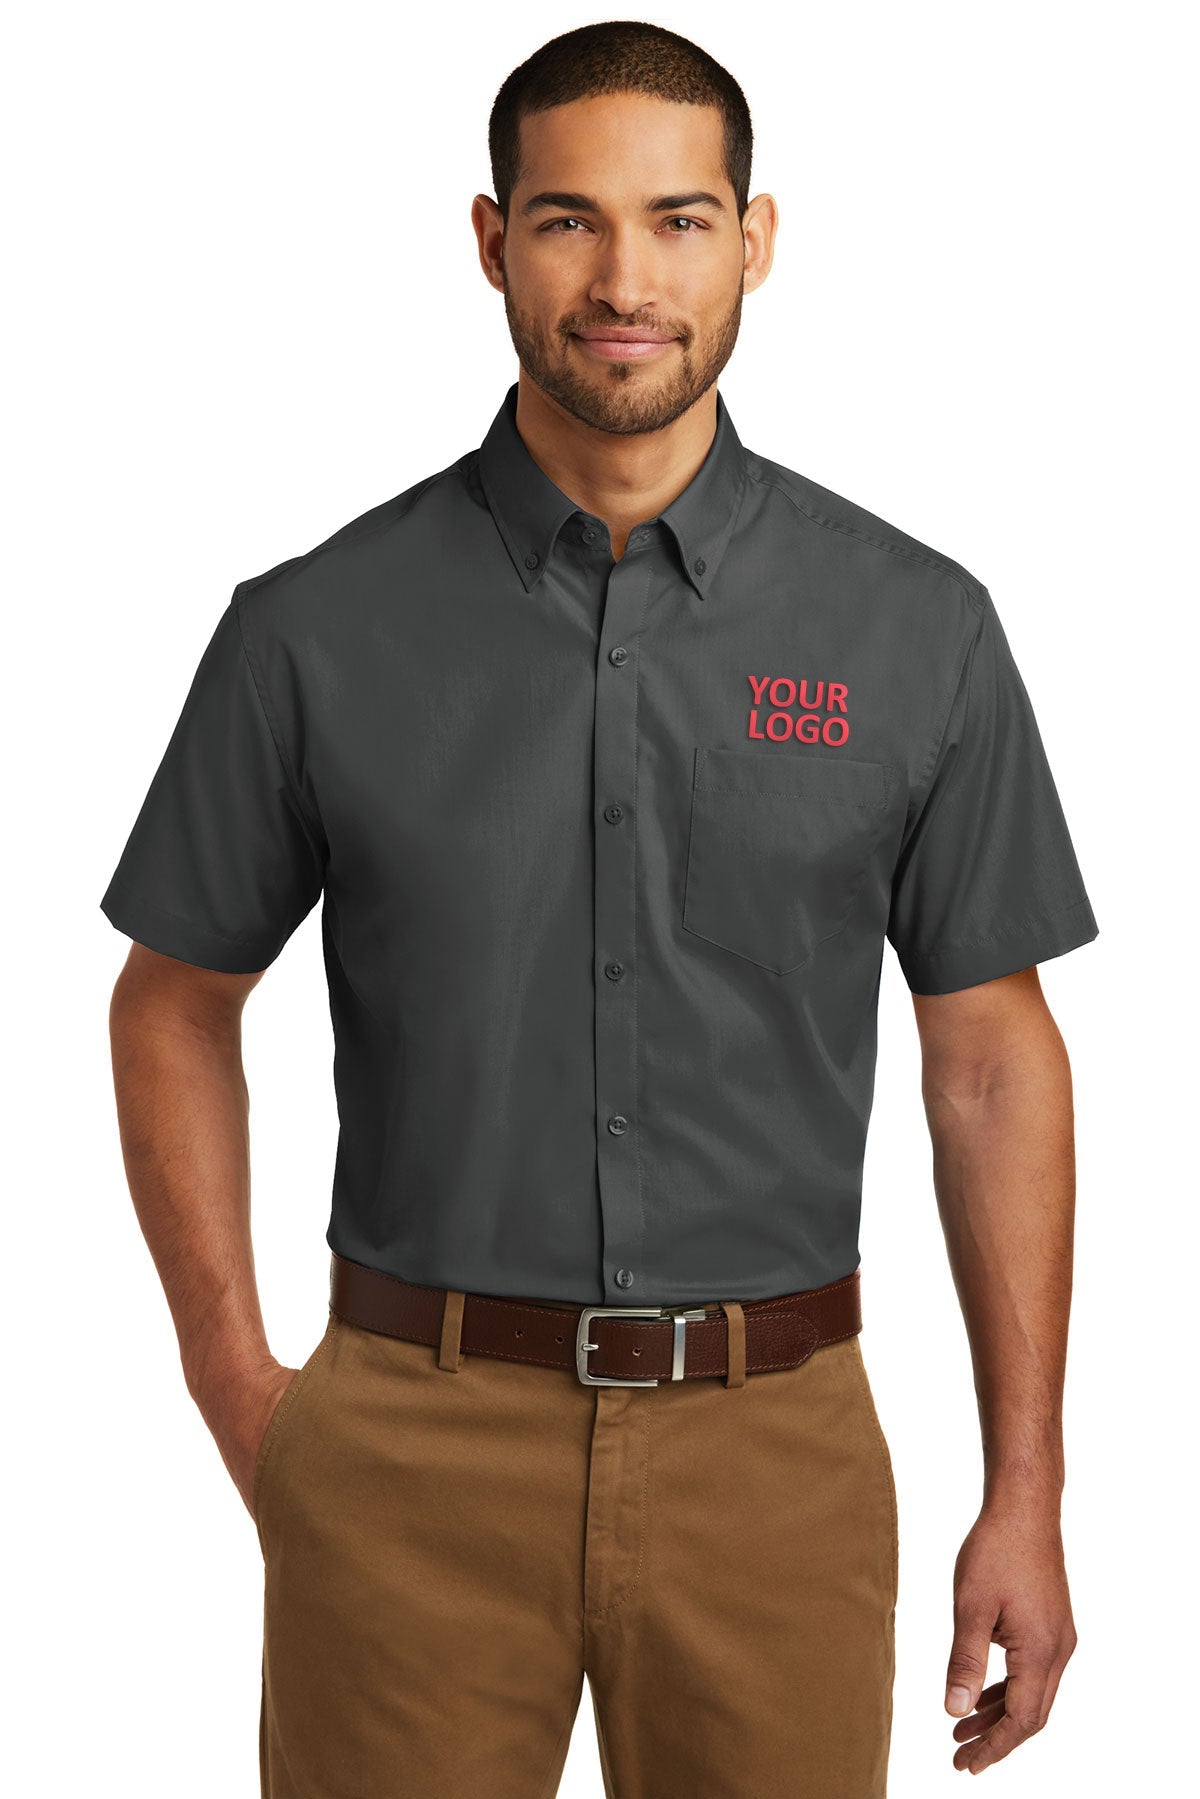 Port Authority Graphite W101 work shirts with logo